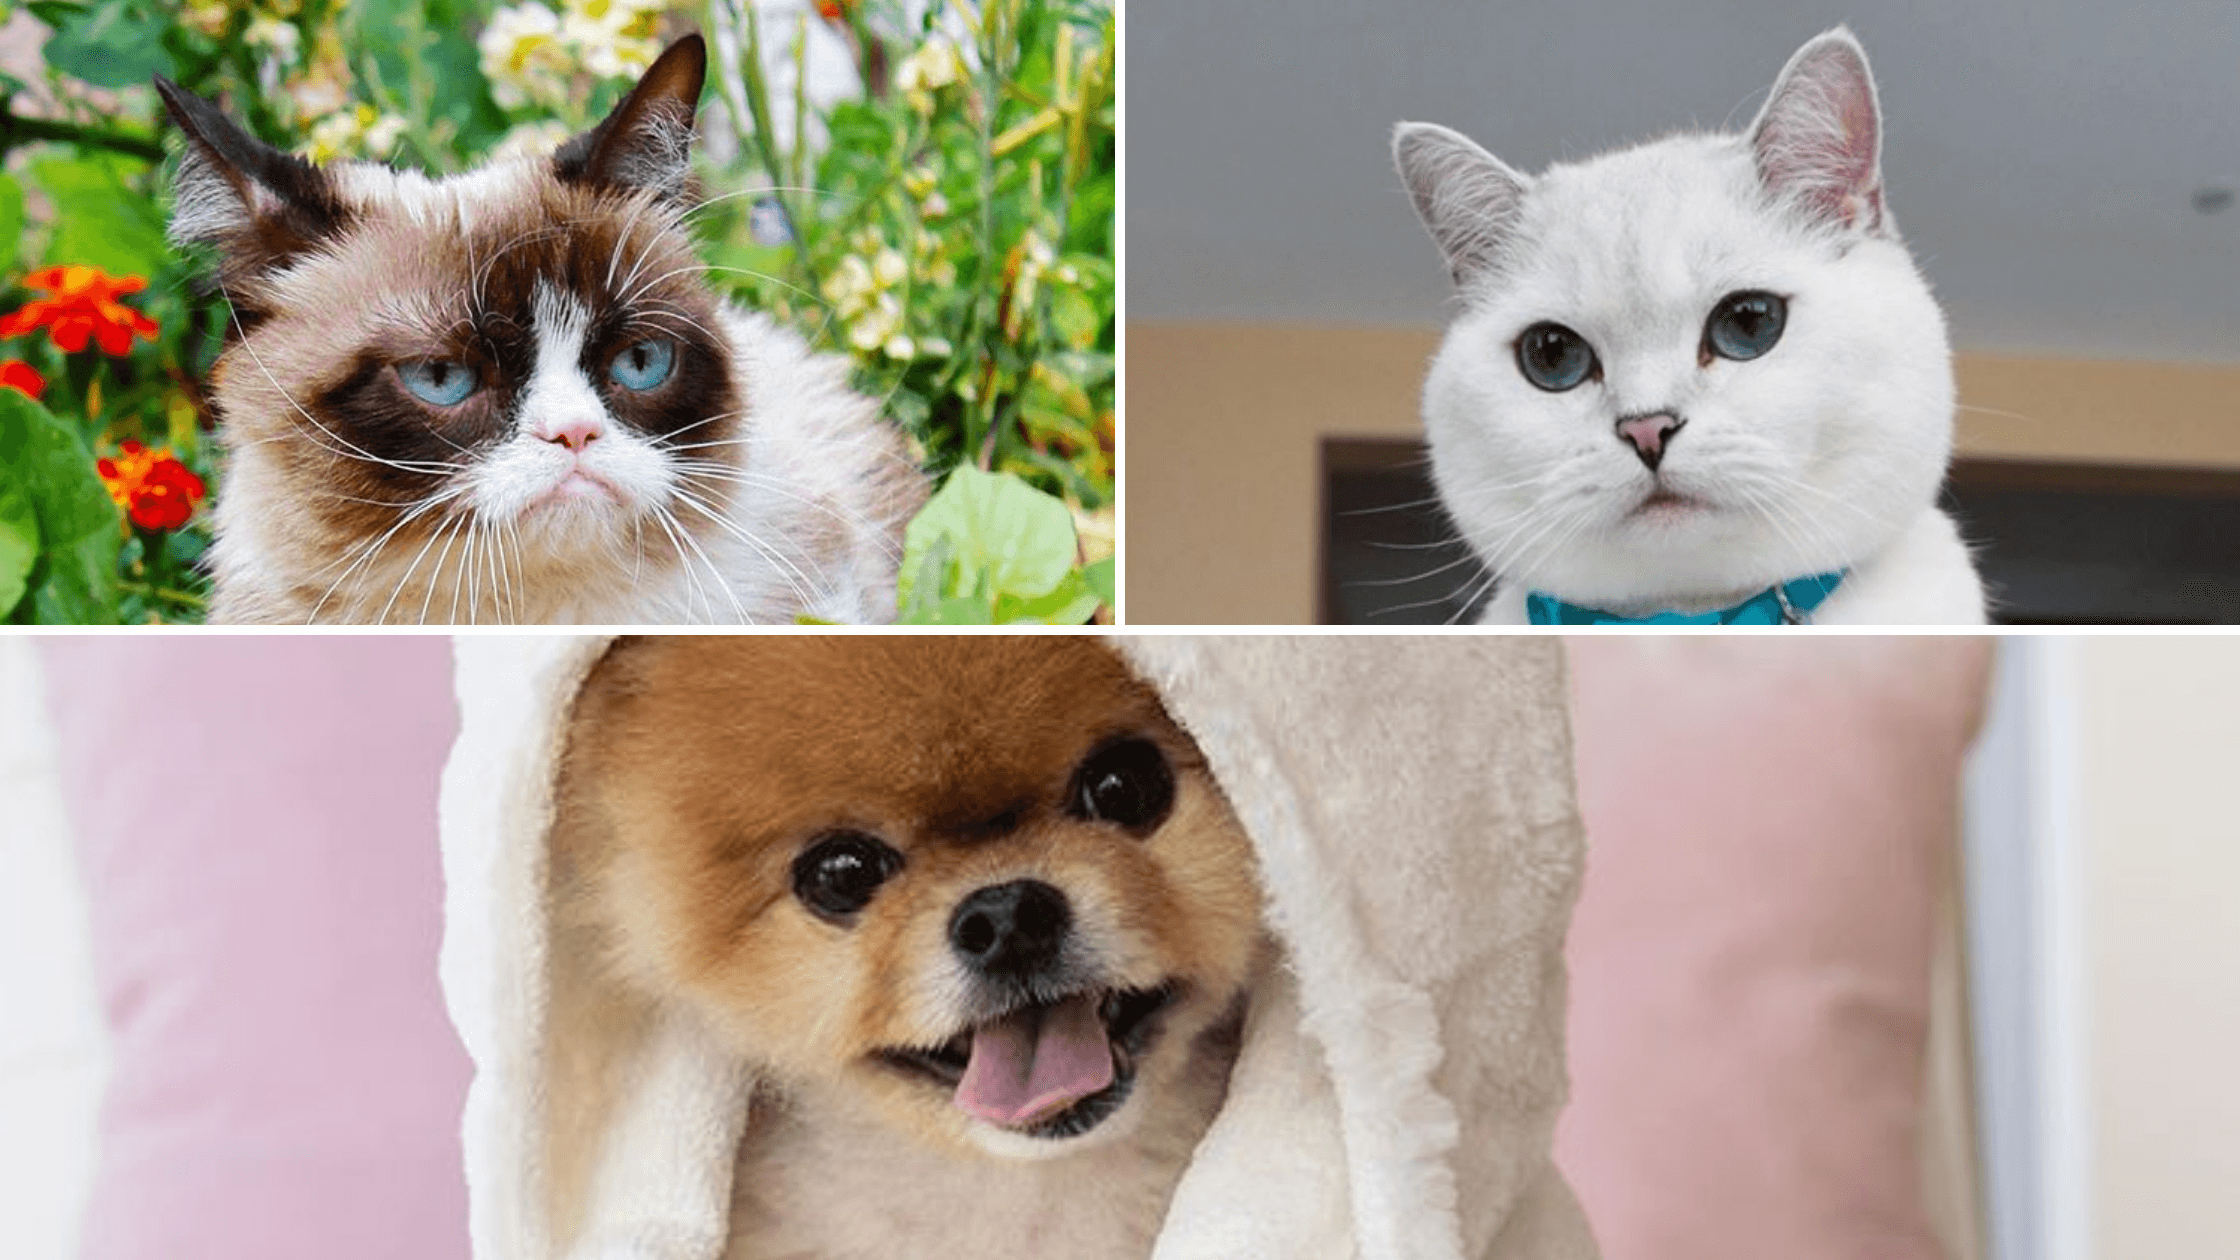 pet celebrities on IG - grumpy cat, white coffee cat, and jiff pom